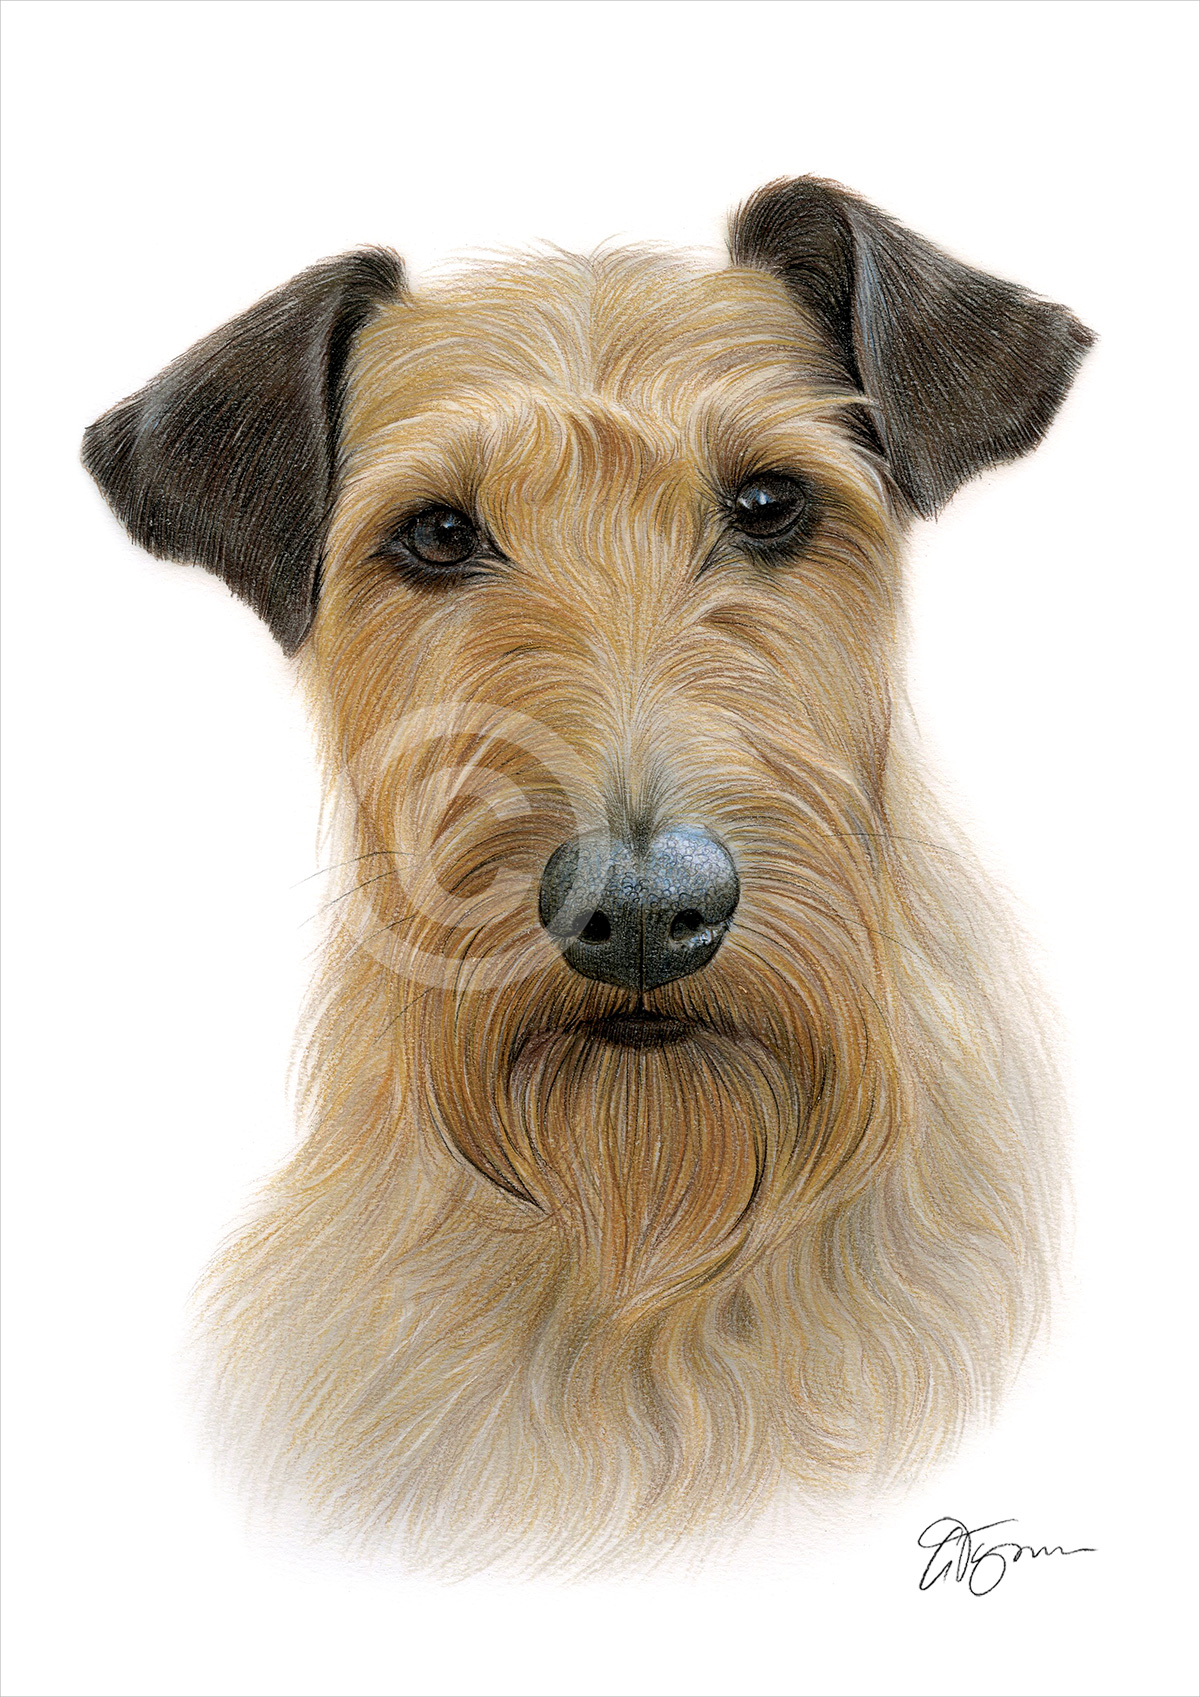 Colour pencil drawing of an Irish Terrier by artist Gary Tymon